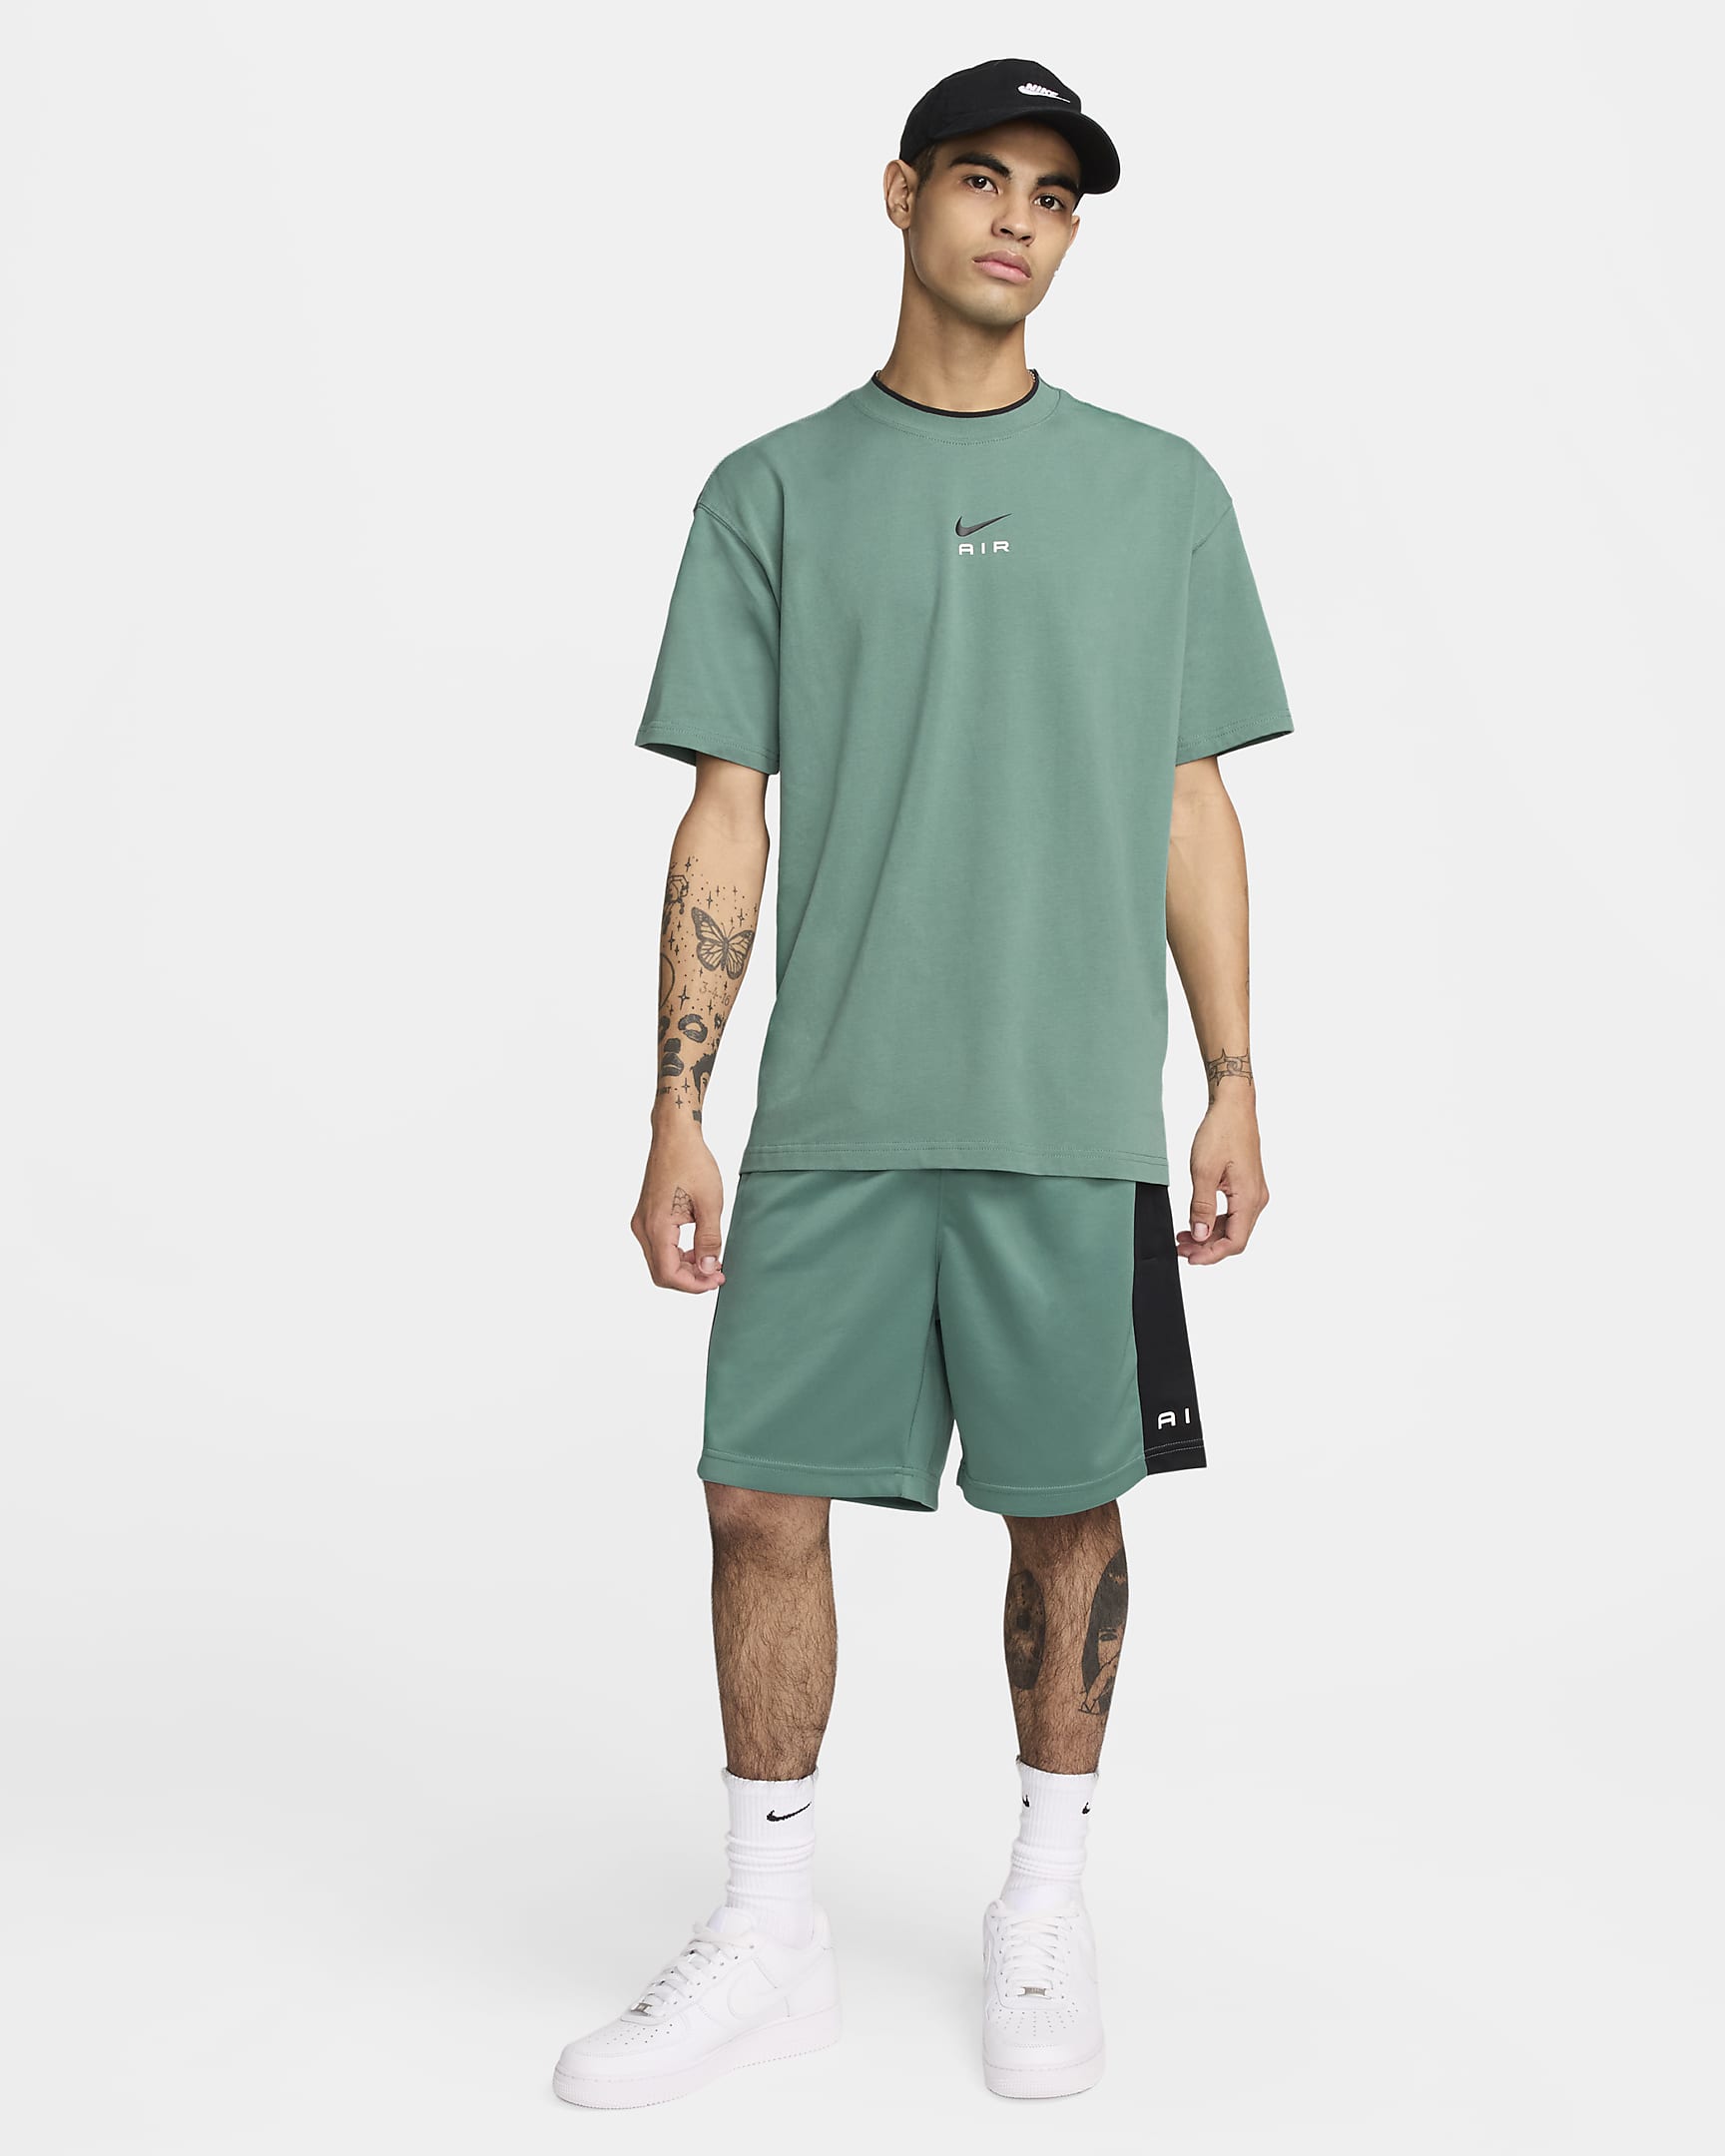 Nike Air Herren-T-Shirt - Bicoastal